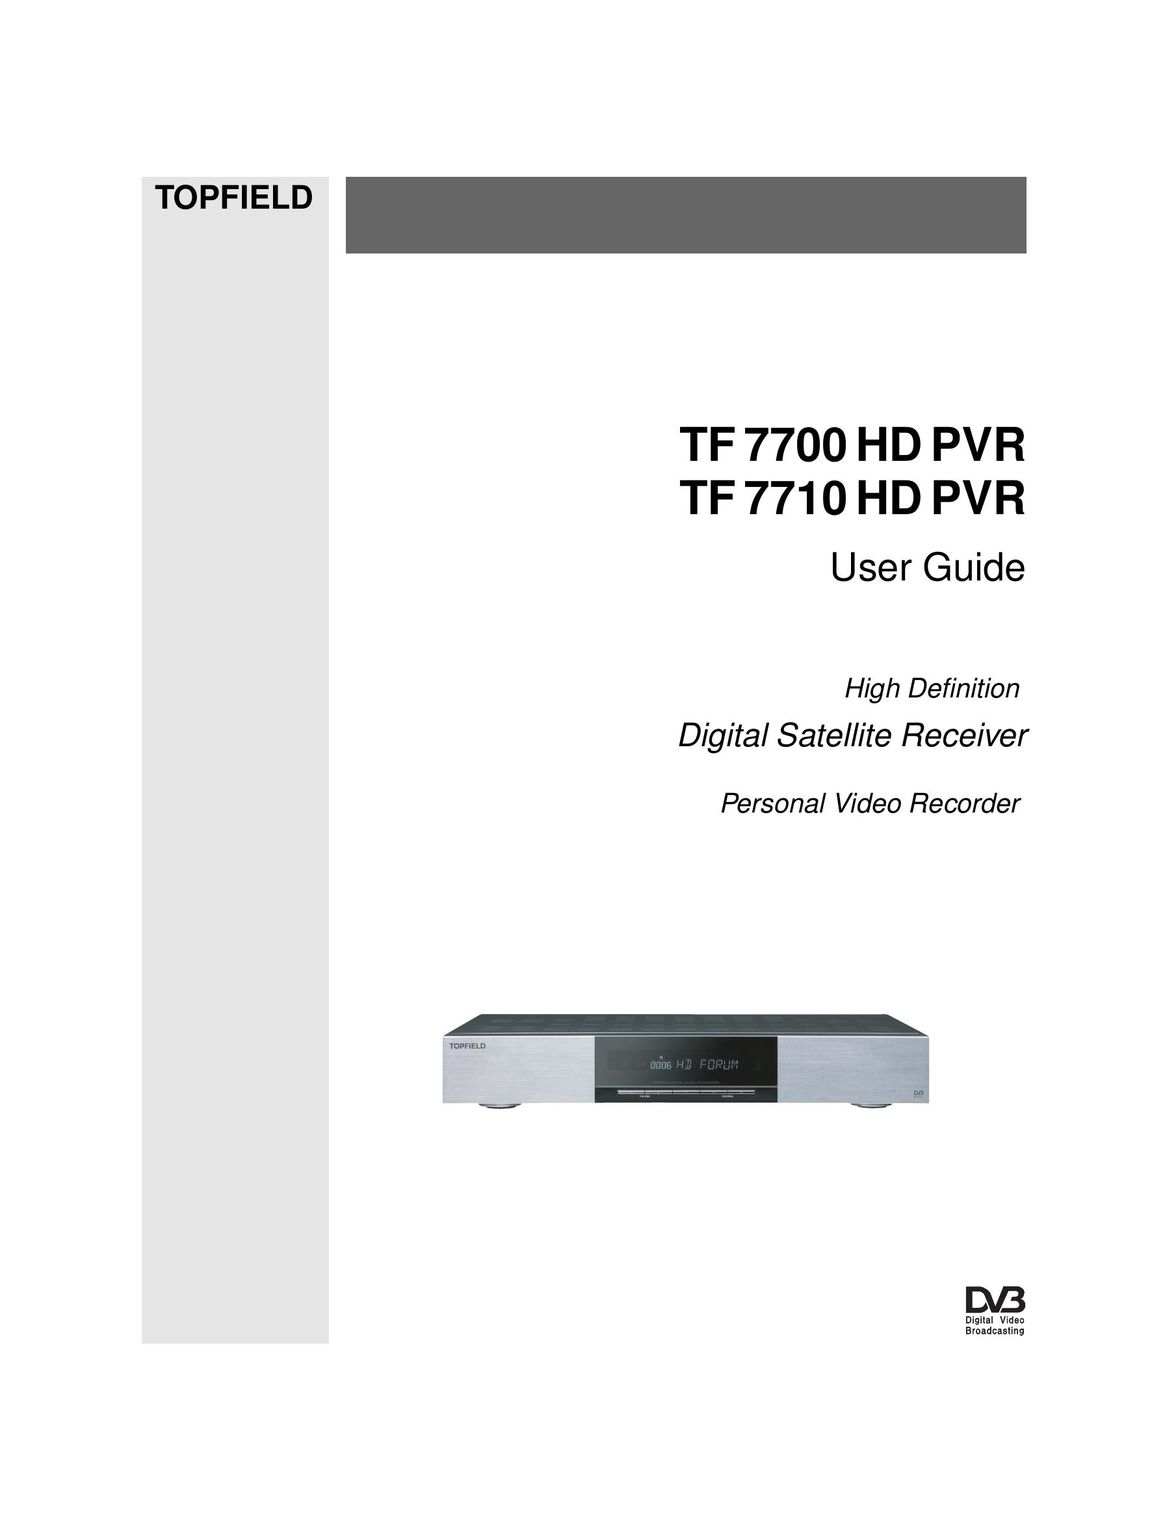 Topfield TF 7710 HD PVR Satellite TV System User Manual